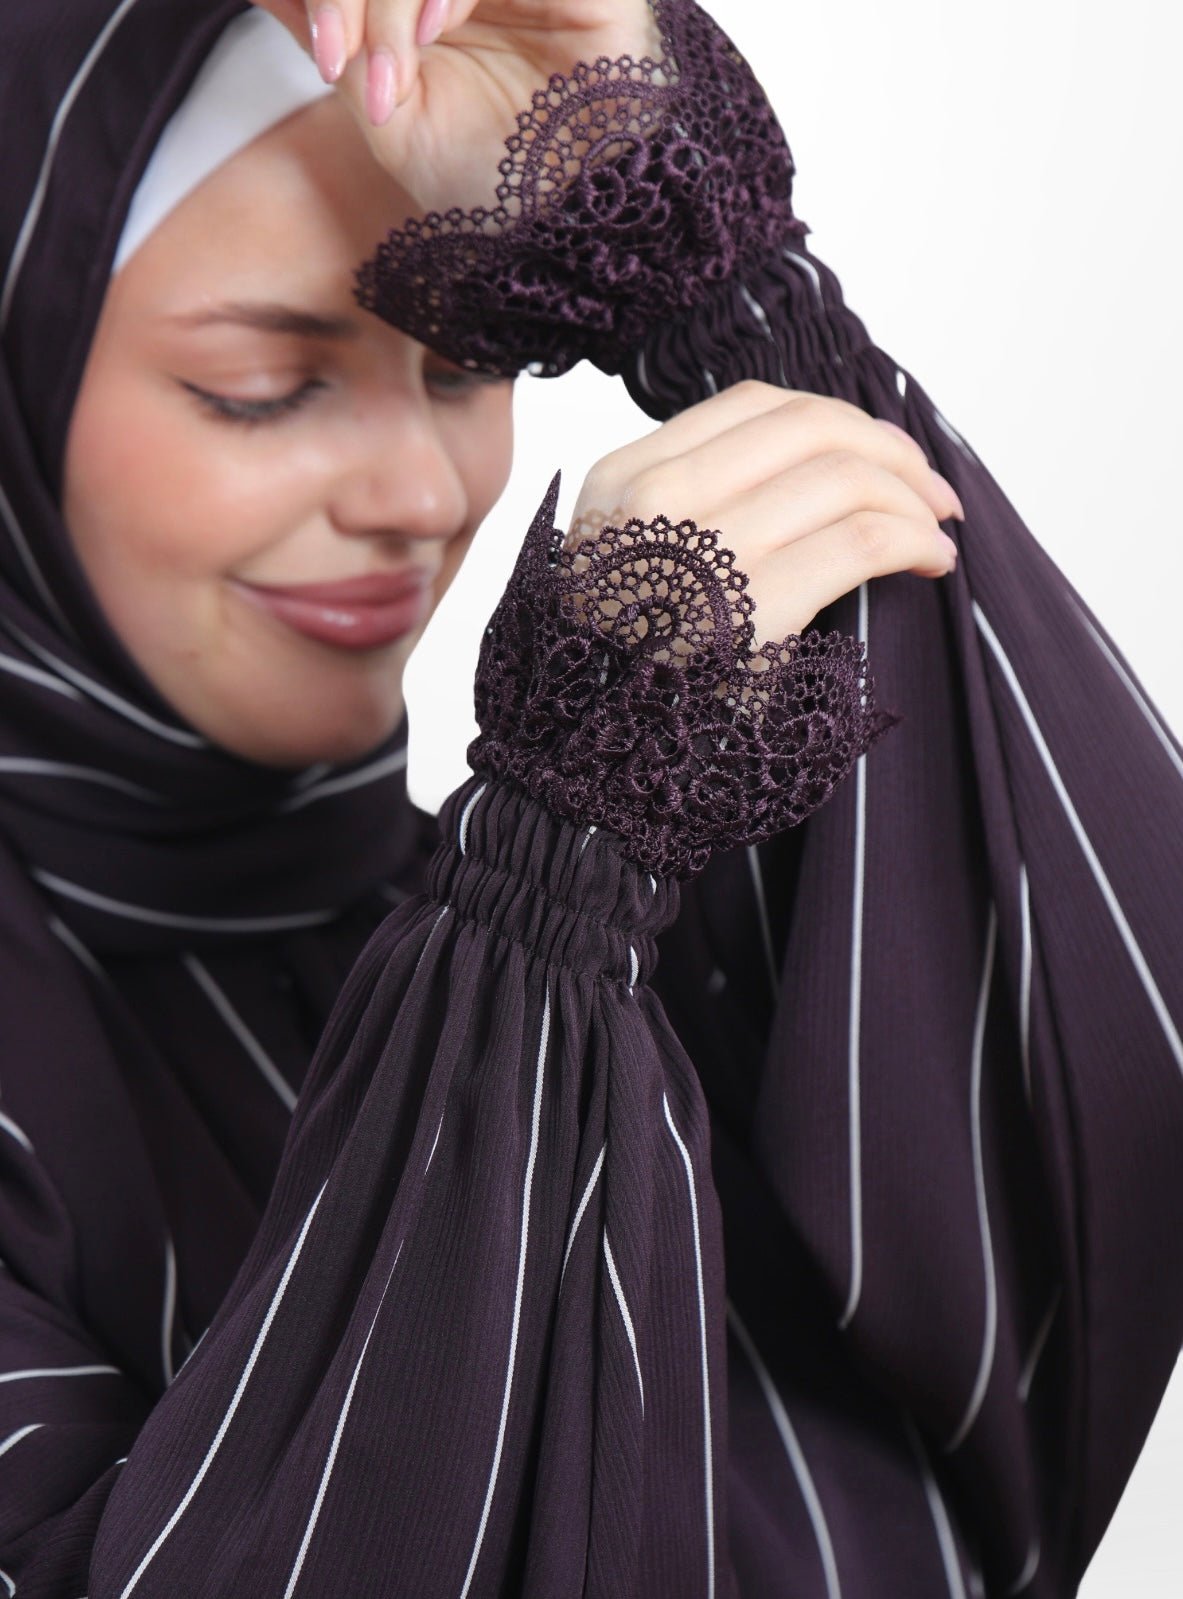 One - Piece Prayer Dress & Abaya with attached Hijab - Striped Crepe - Modest Essence